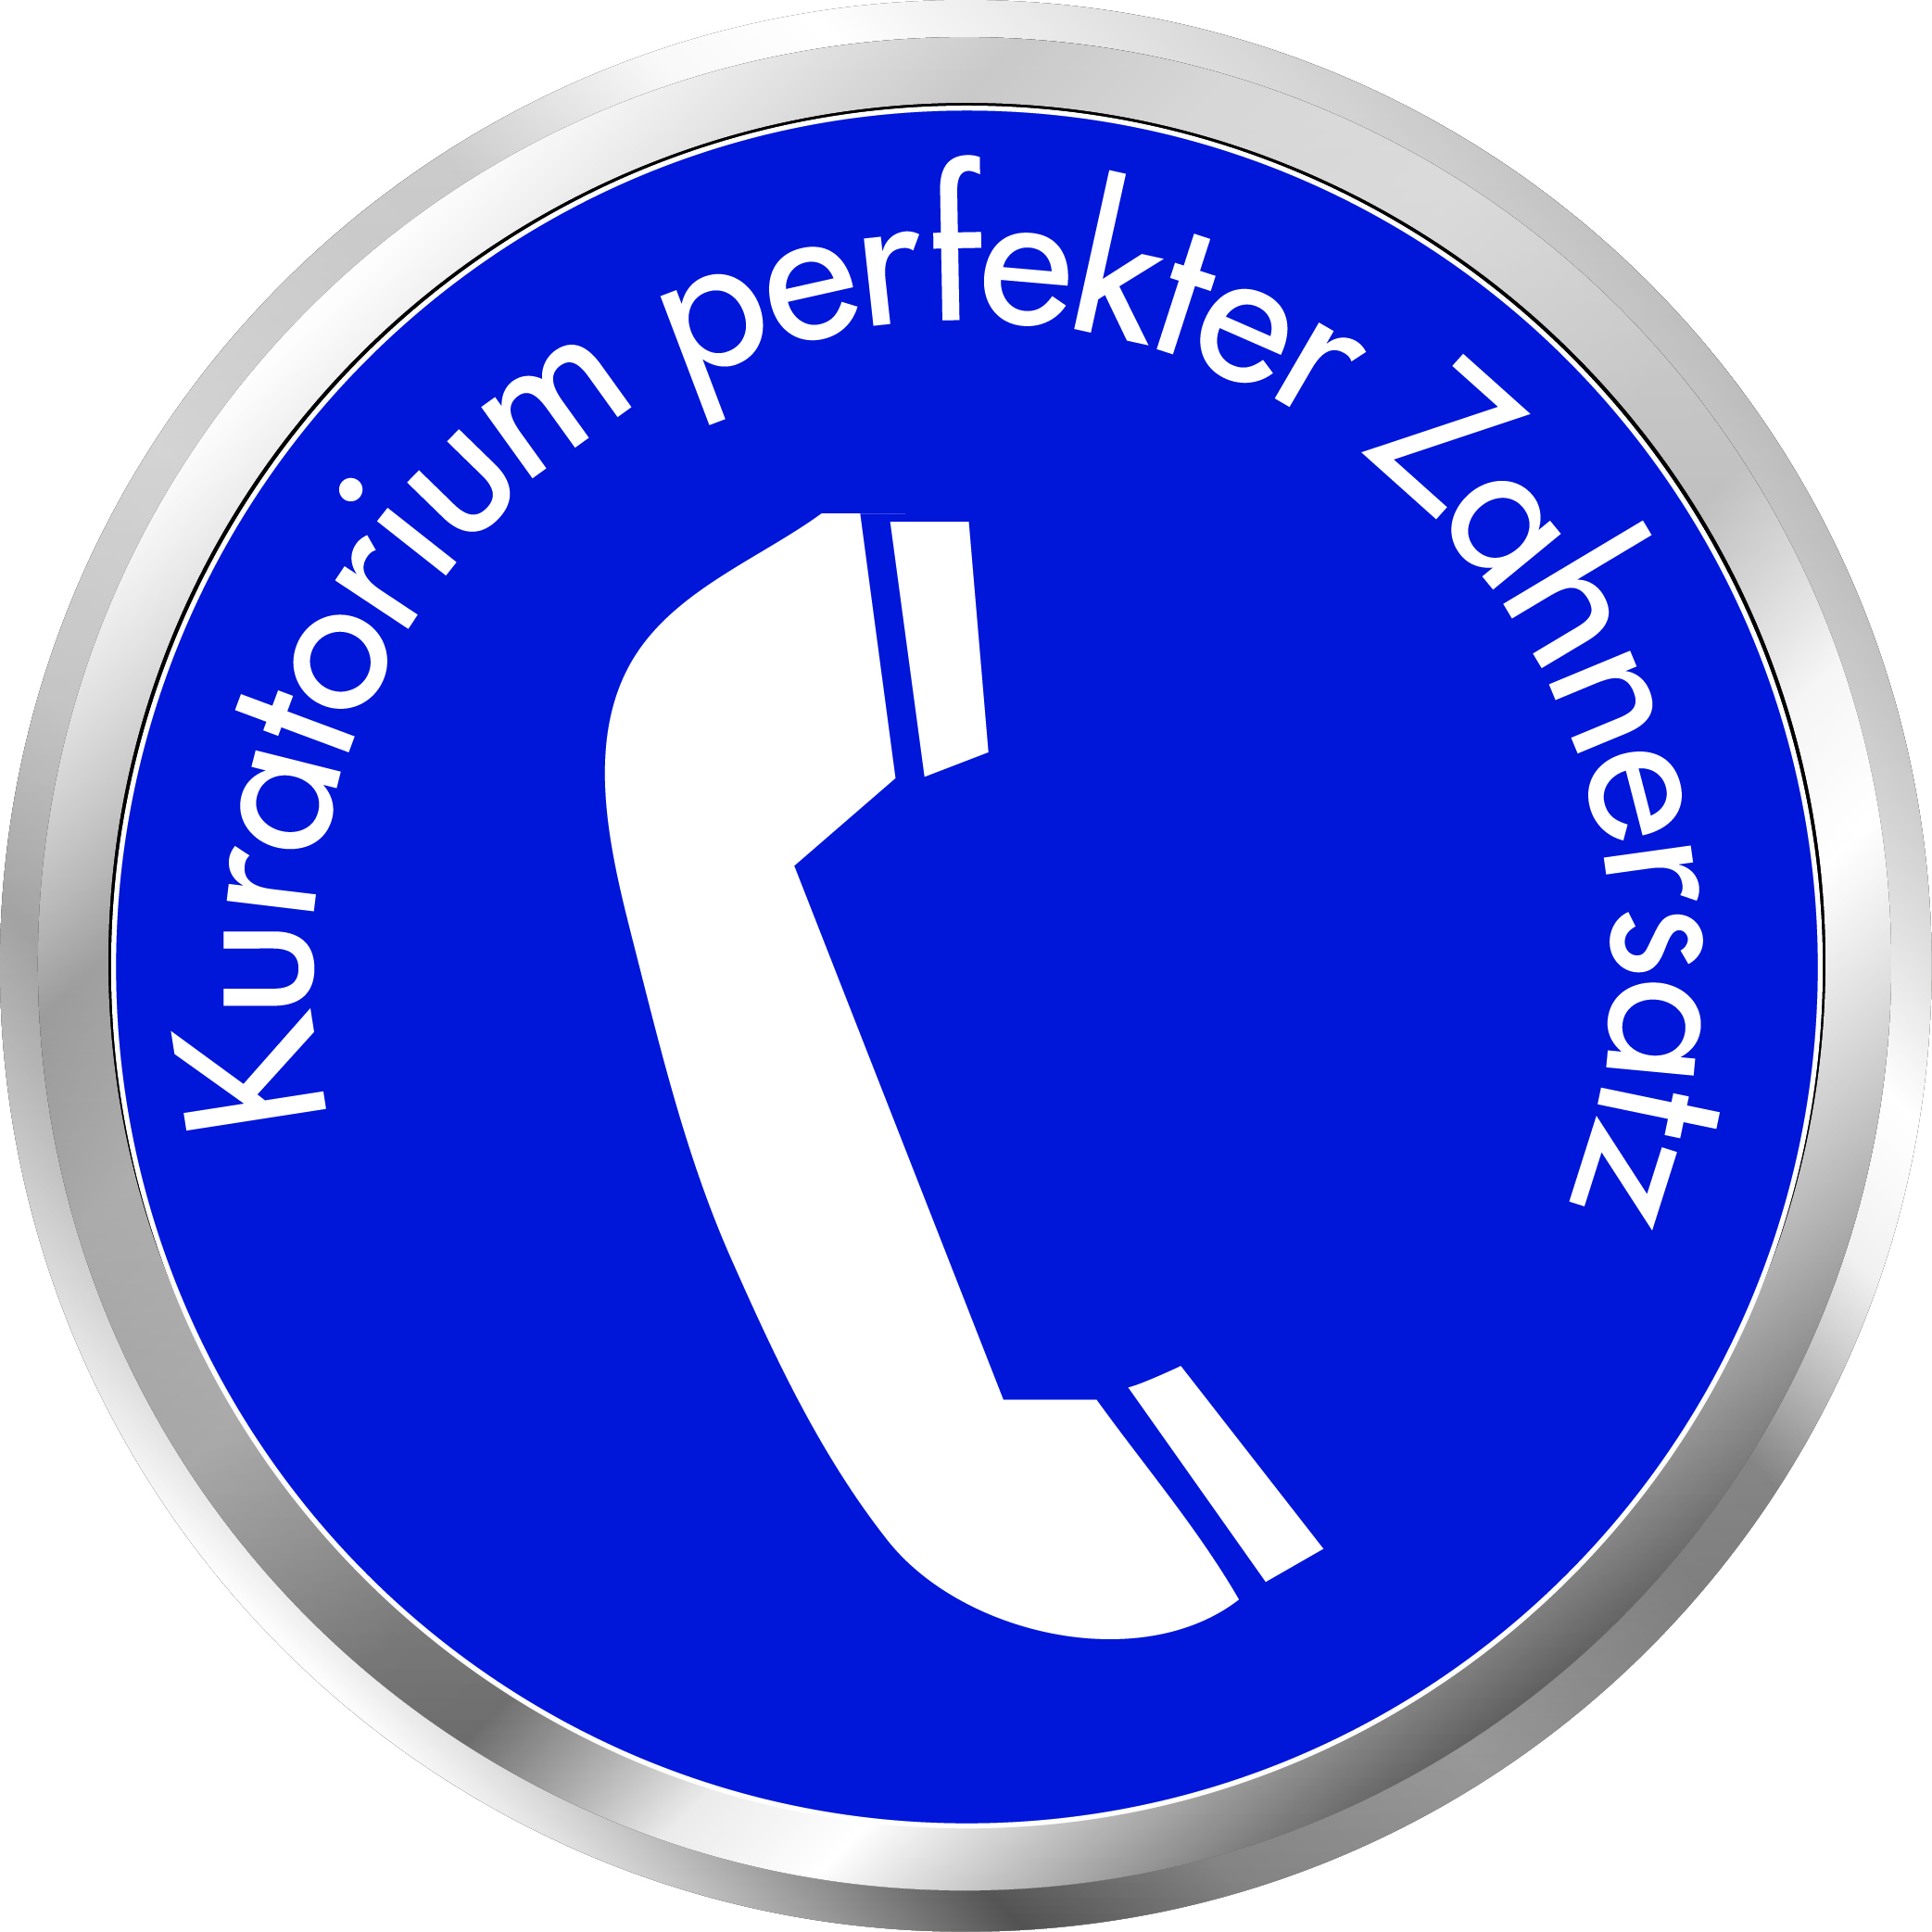 Experten-Telefon am 25.09.2012 zum Thema "Zahnersatz"